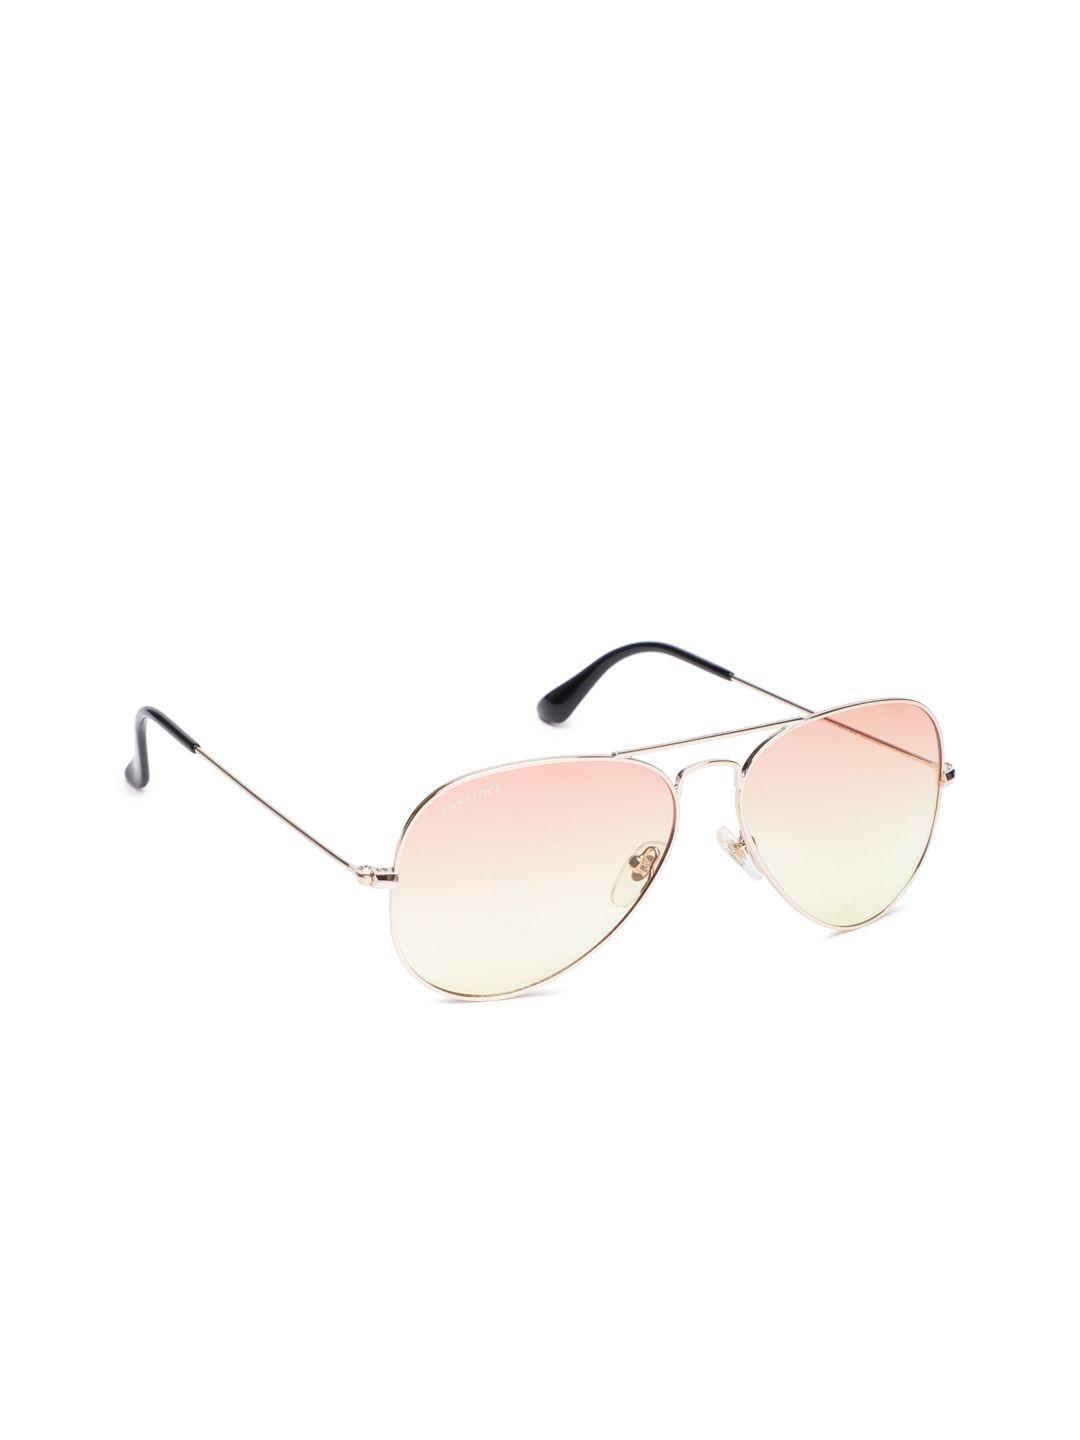 fastrack-men-aviator-sunglasses-m165yl26